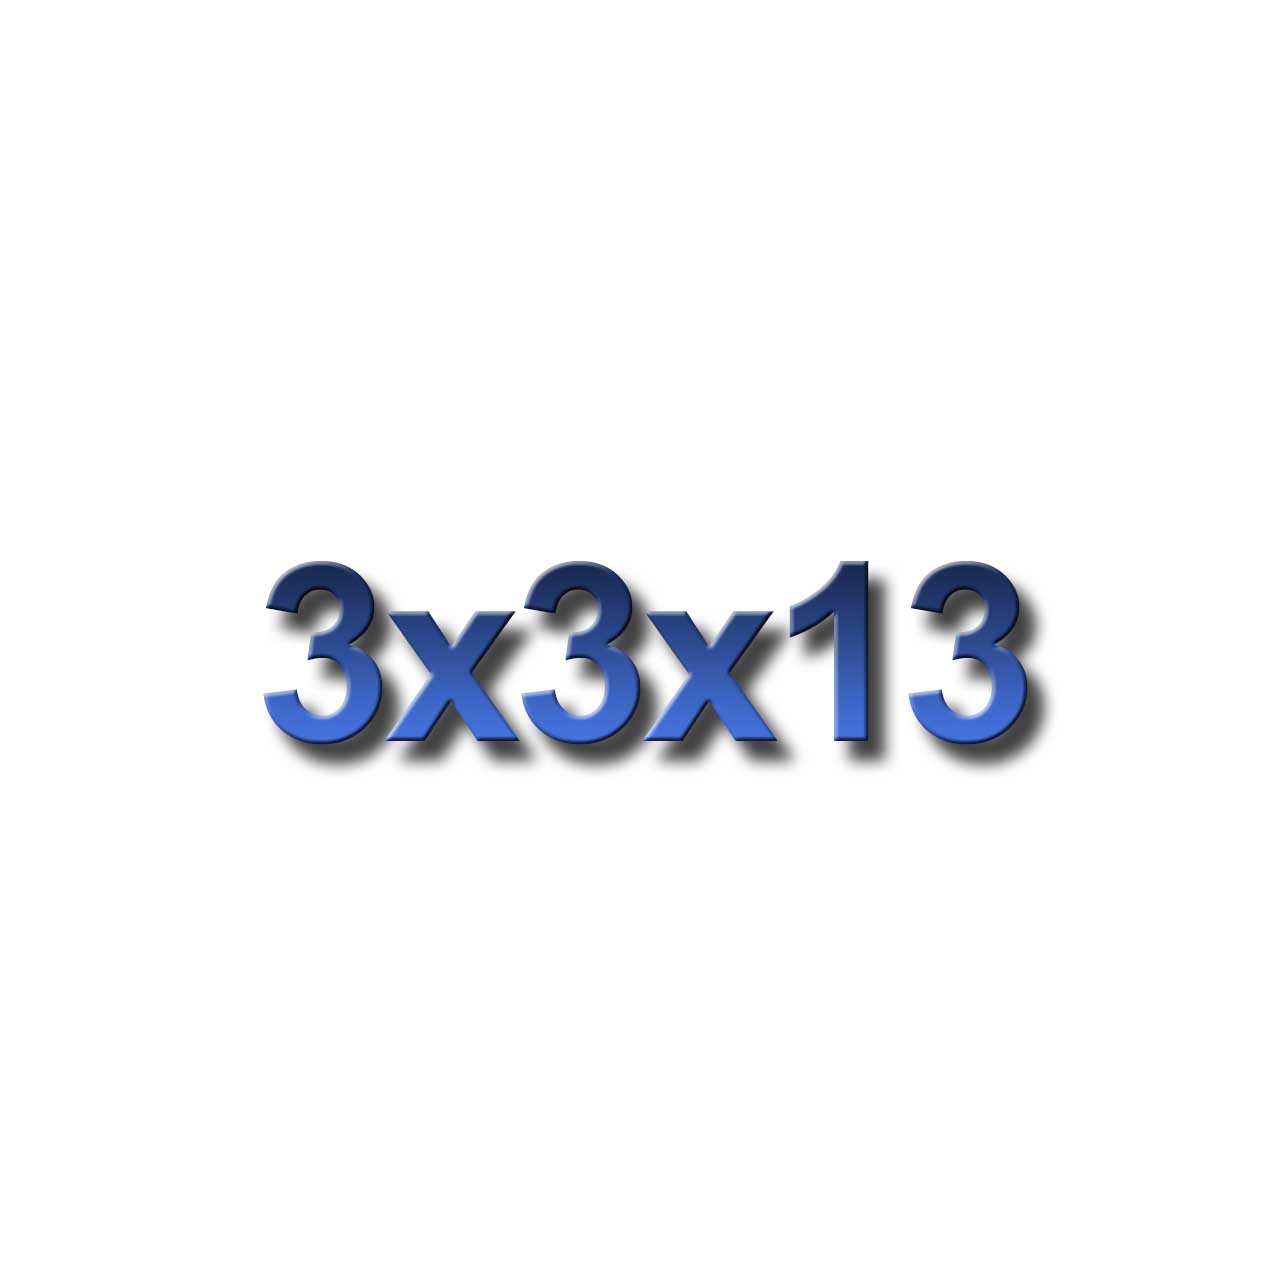 3x3x13